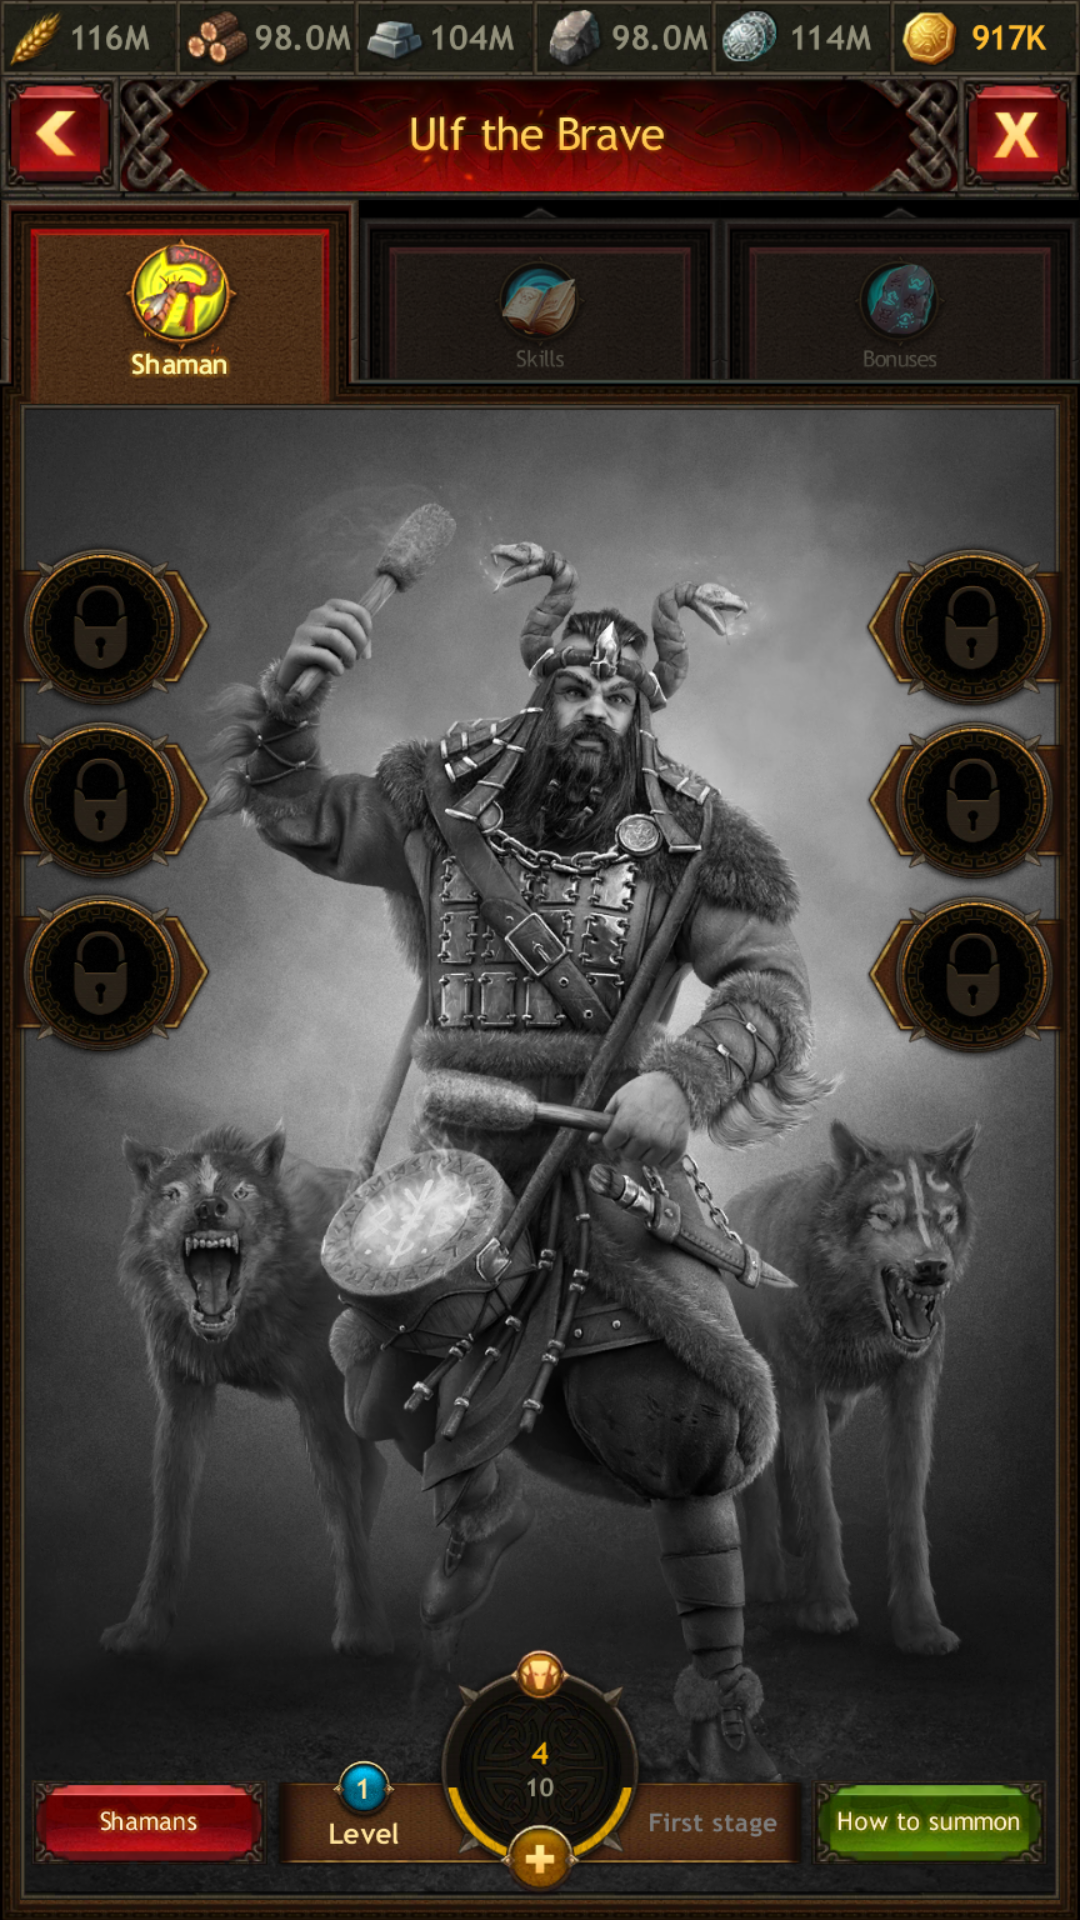 Dark Blade - Equipment - Vikings: War of clans - Guide